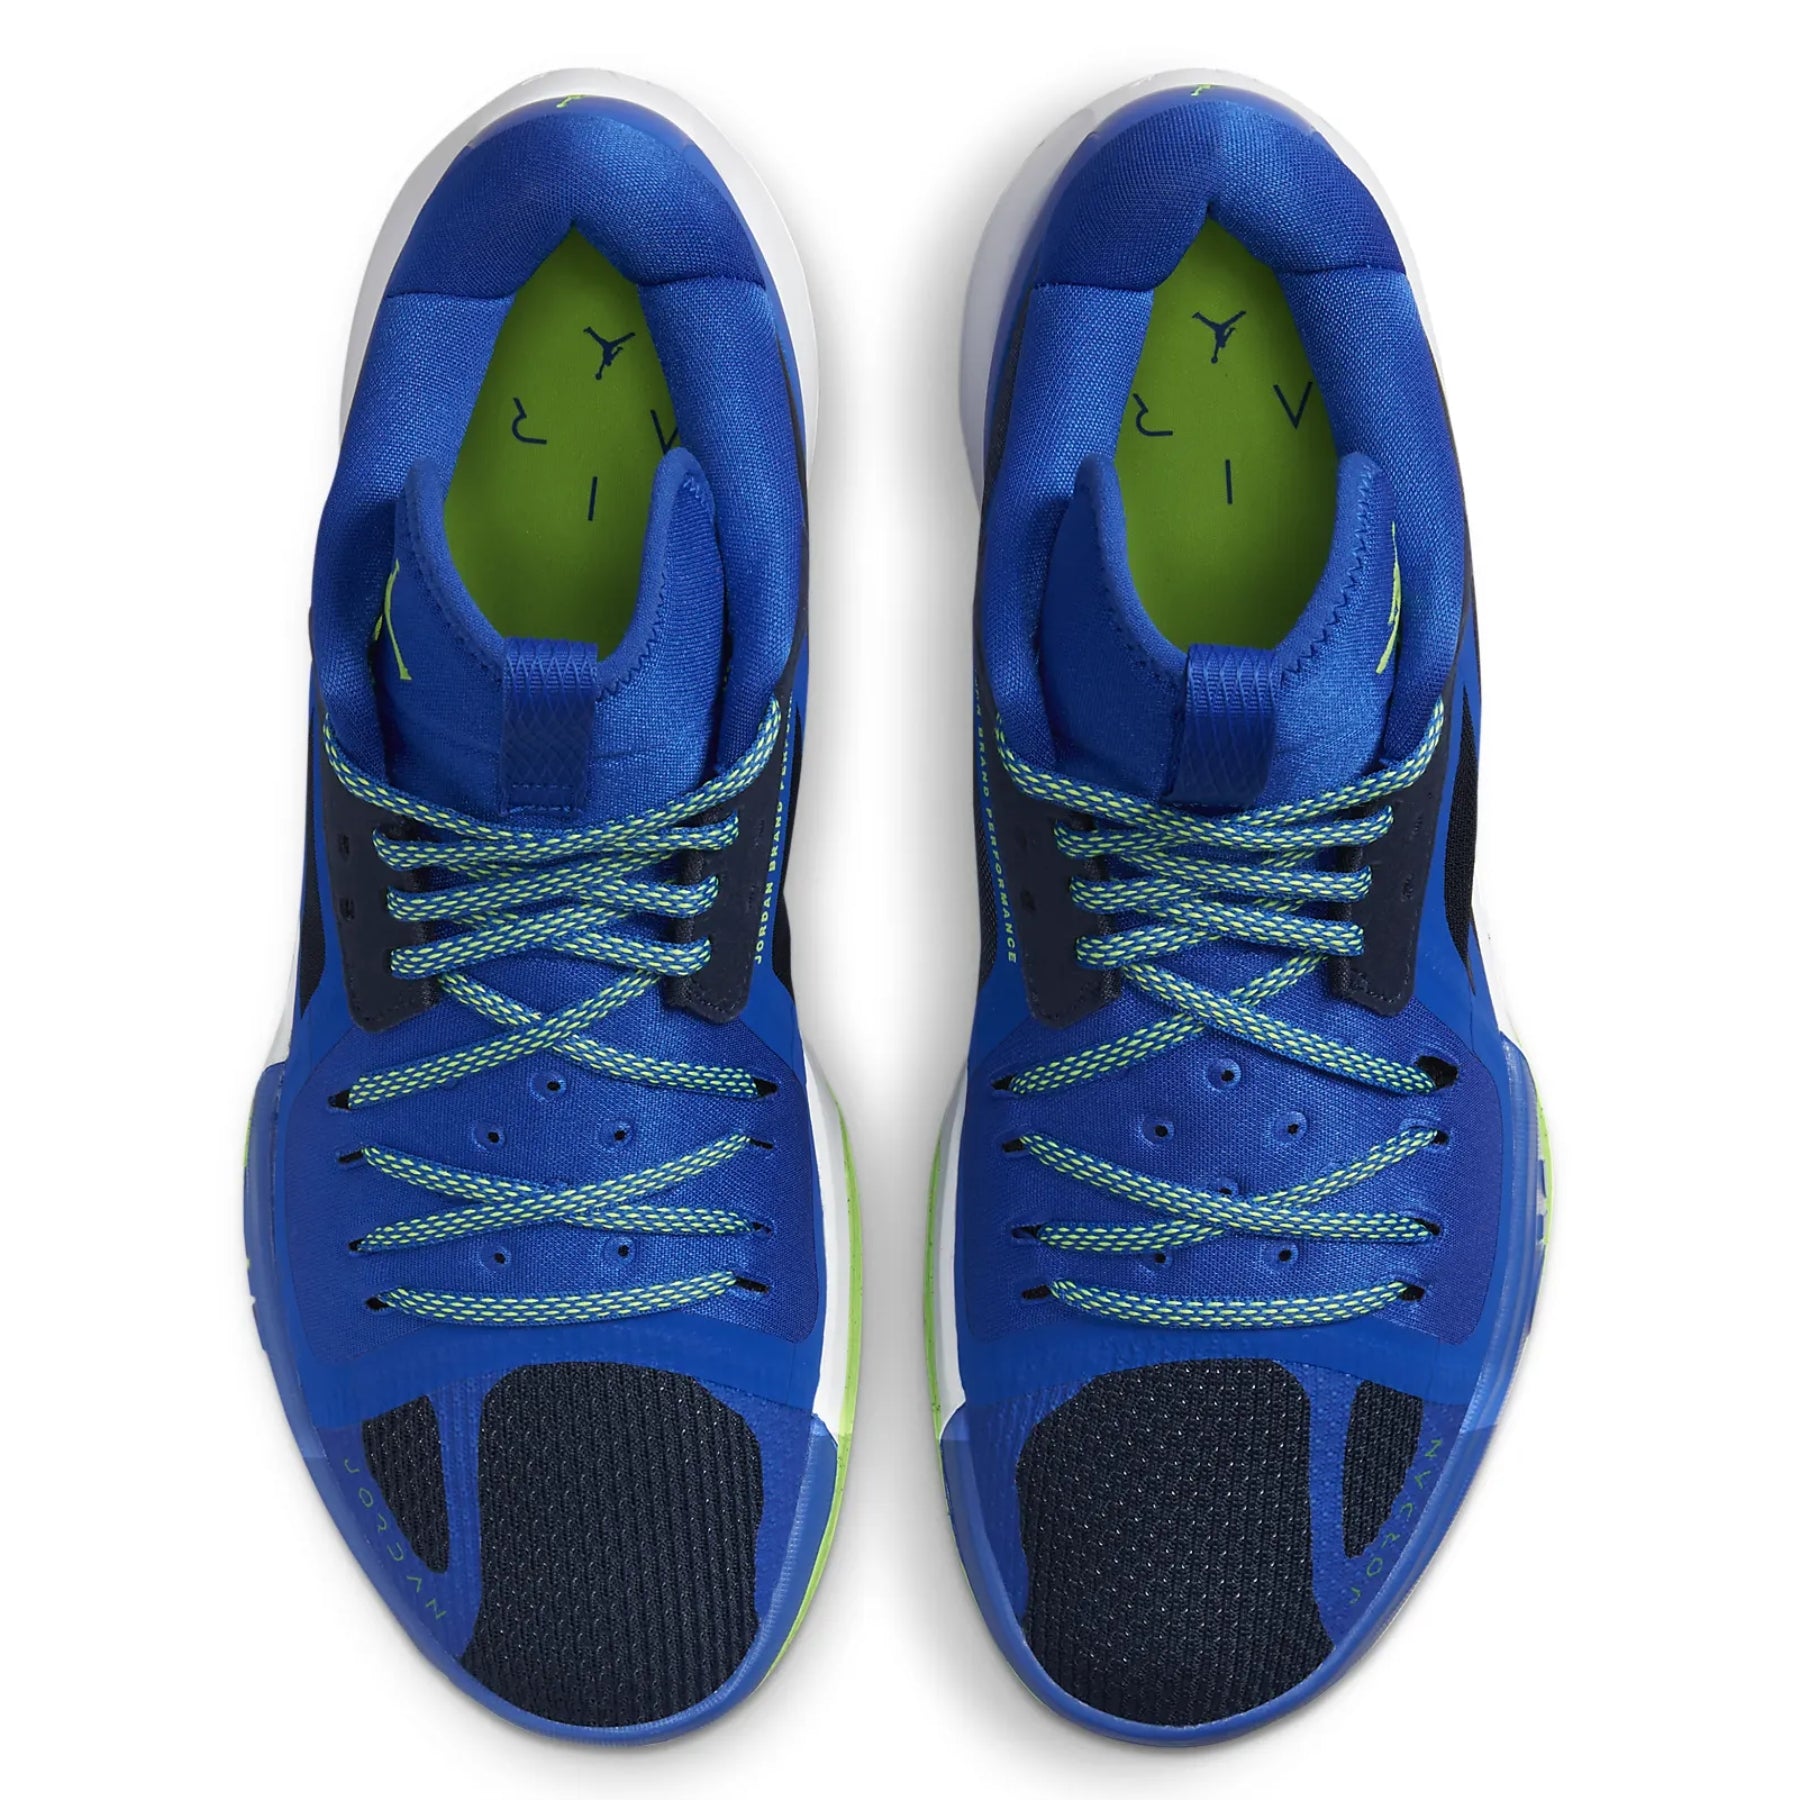 Botin Nike Hombre Basketball Jordan Zoom Separate | DH0249-400